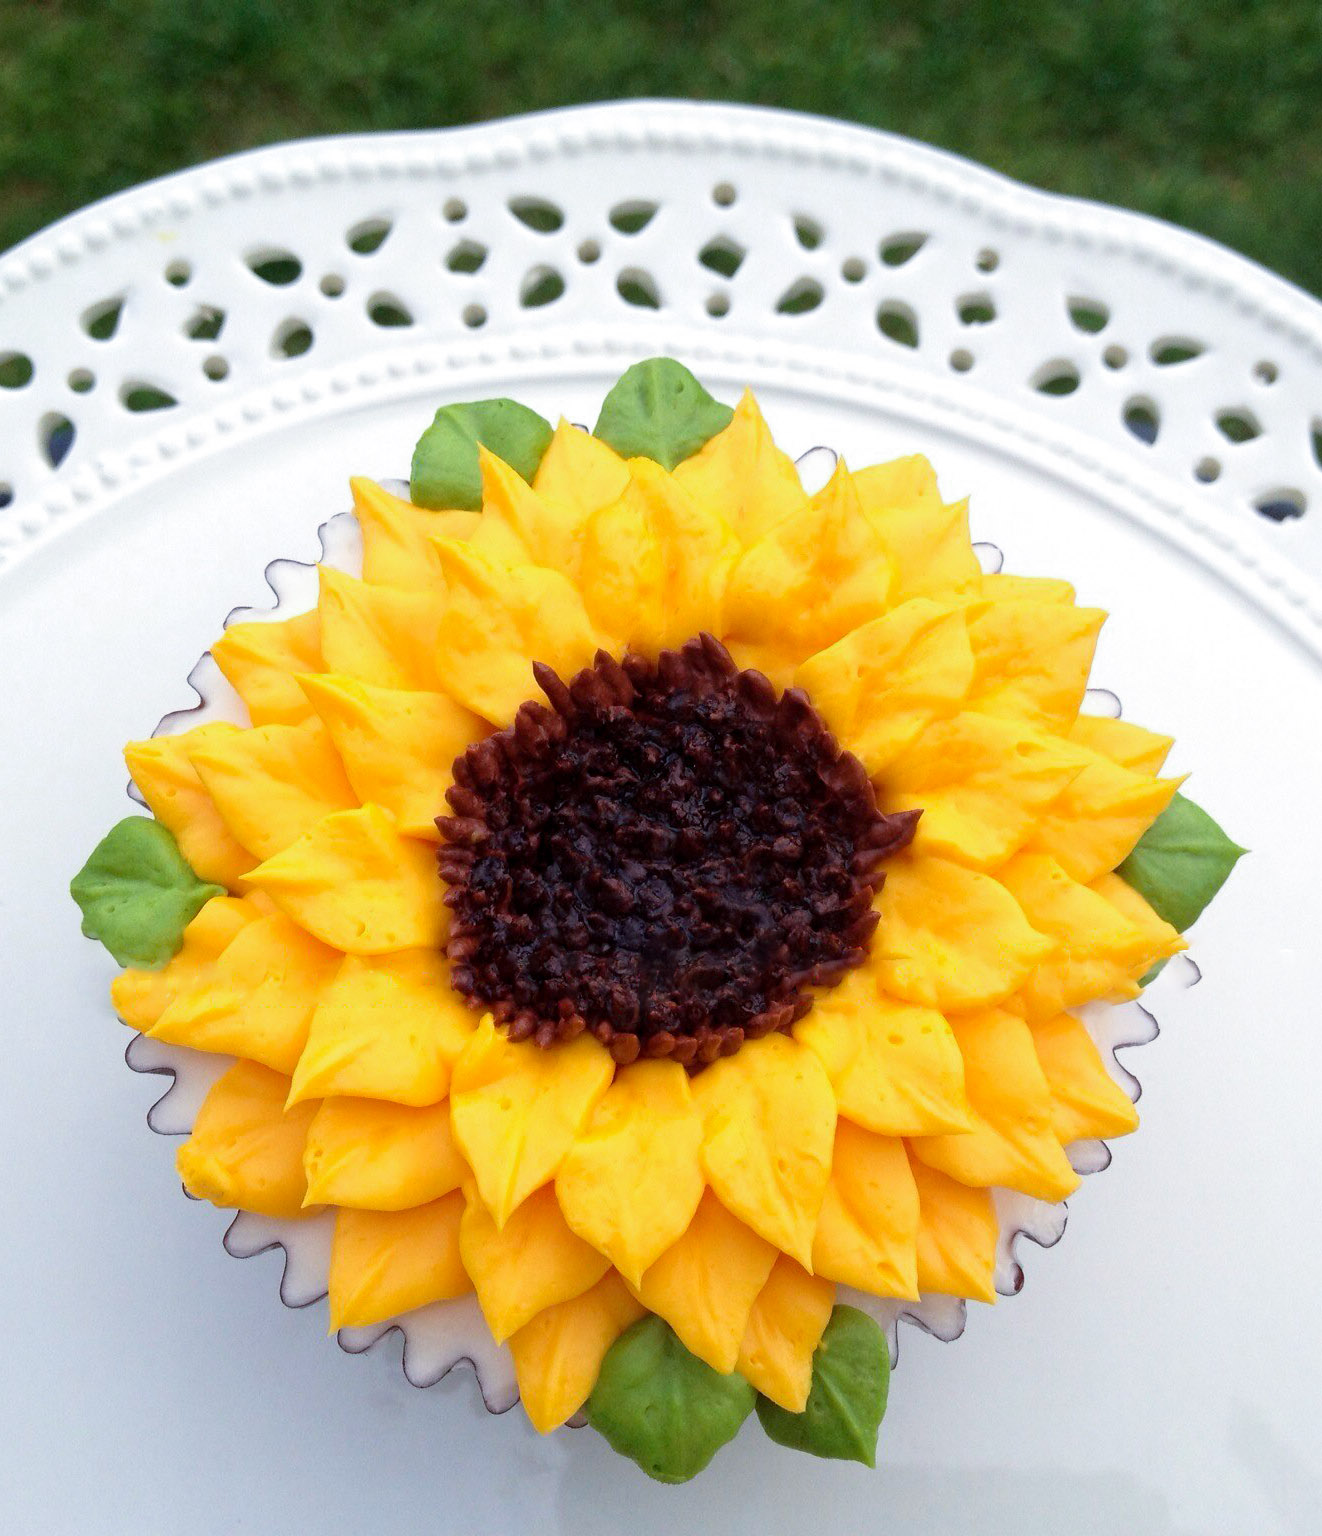 Sunflower cupcake